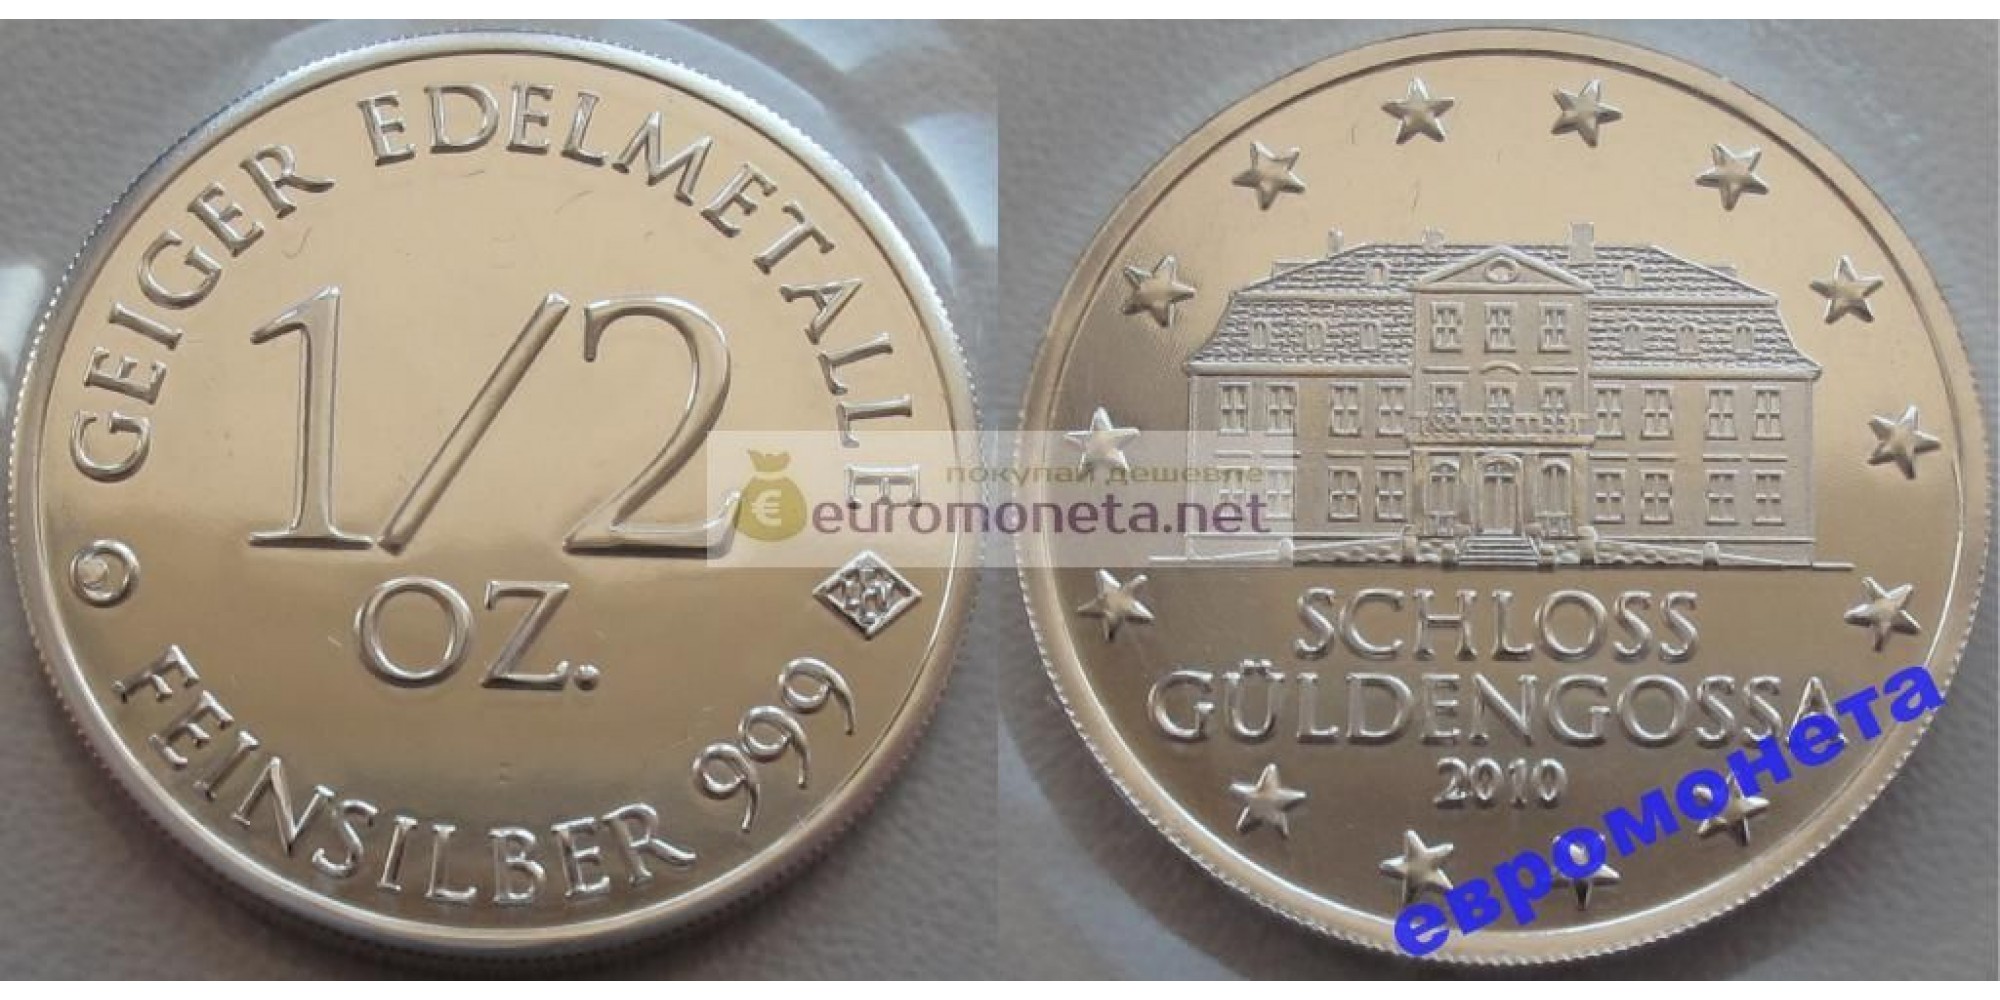 Германия 1/2 oz пол унции Geiger Edelmetalle Schloss Guldengossa серебро запайка